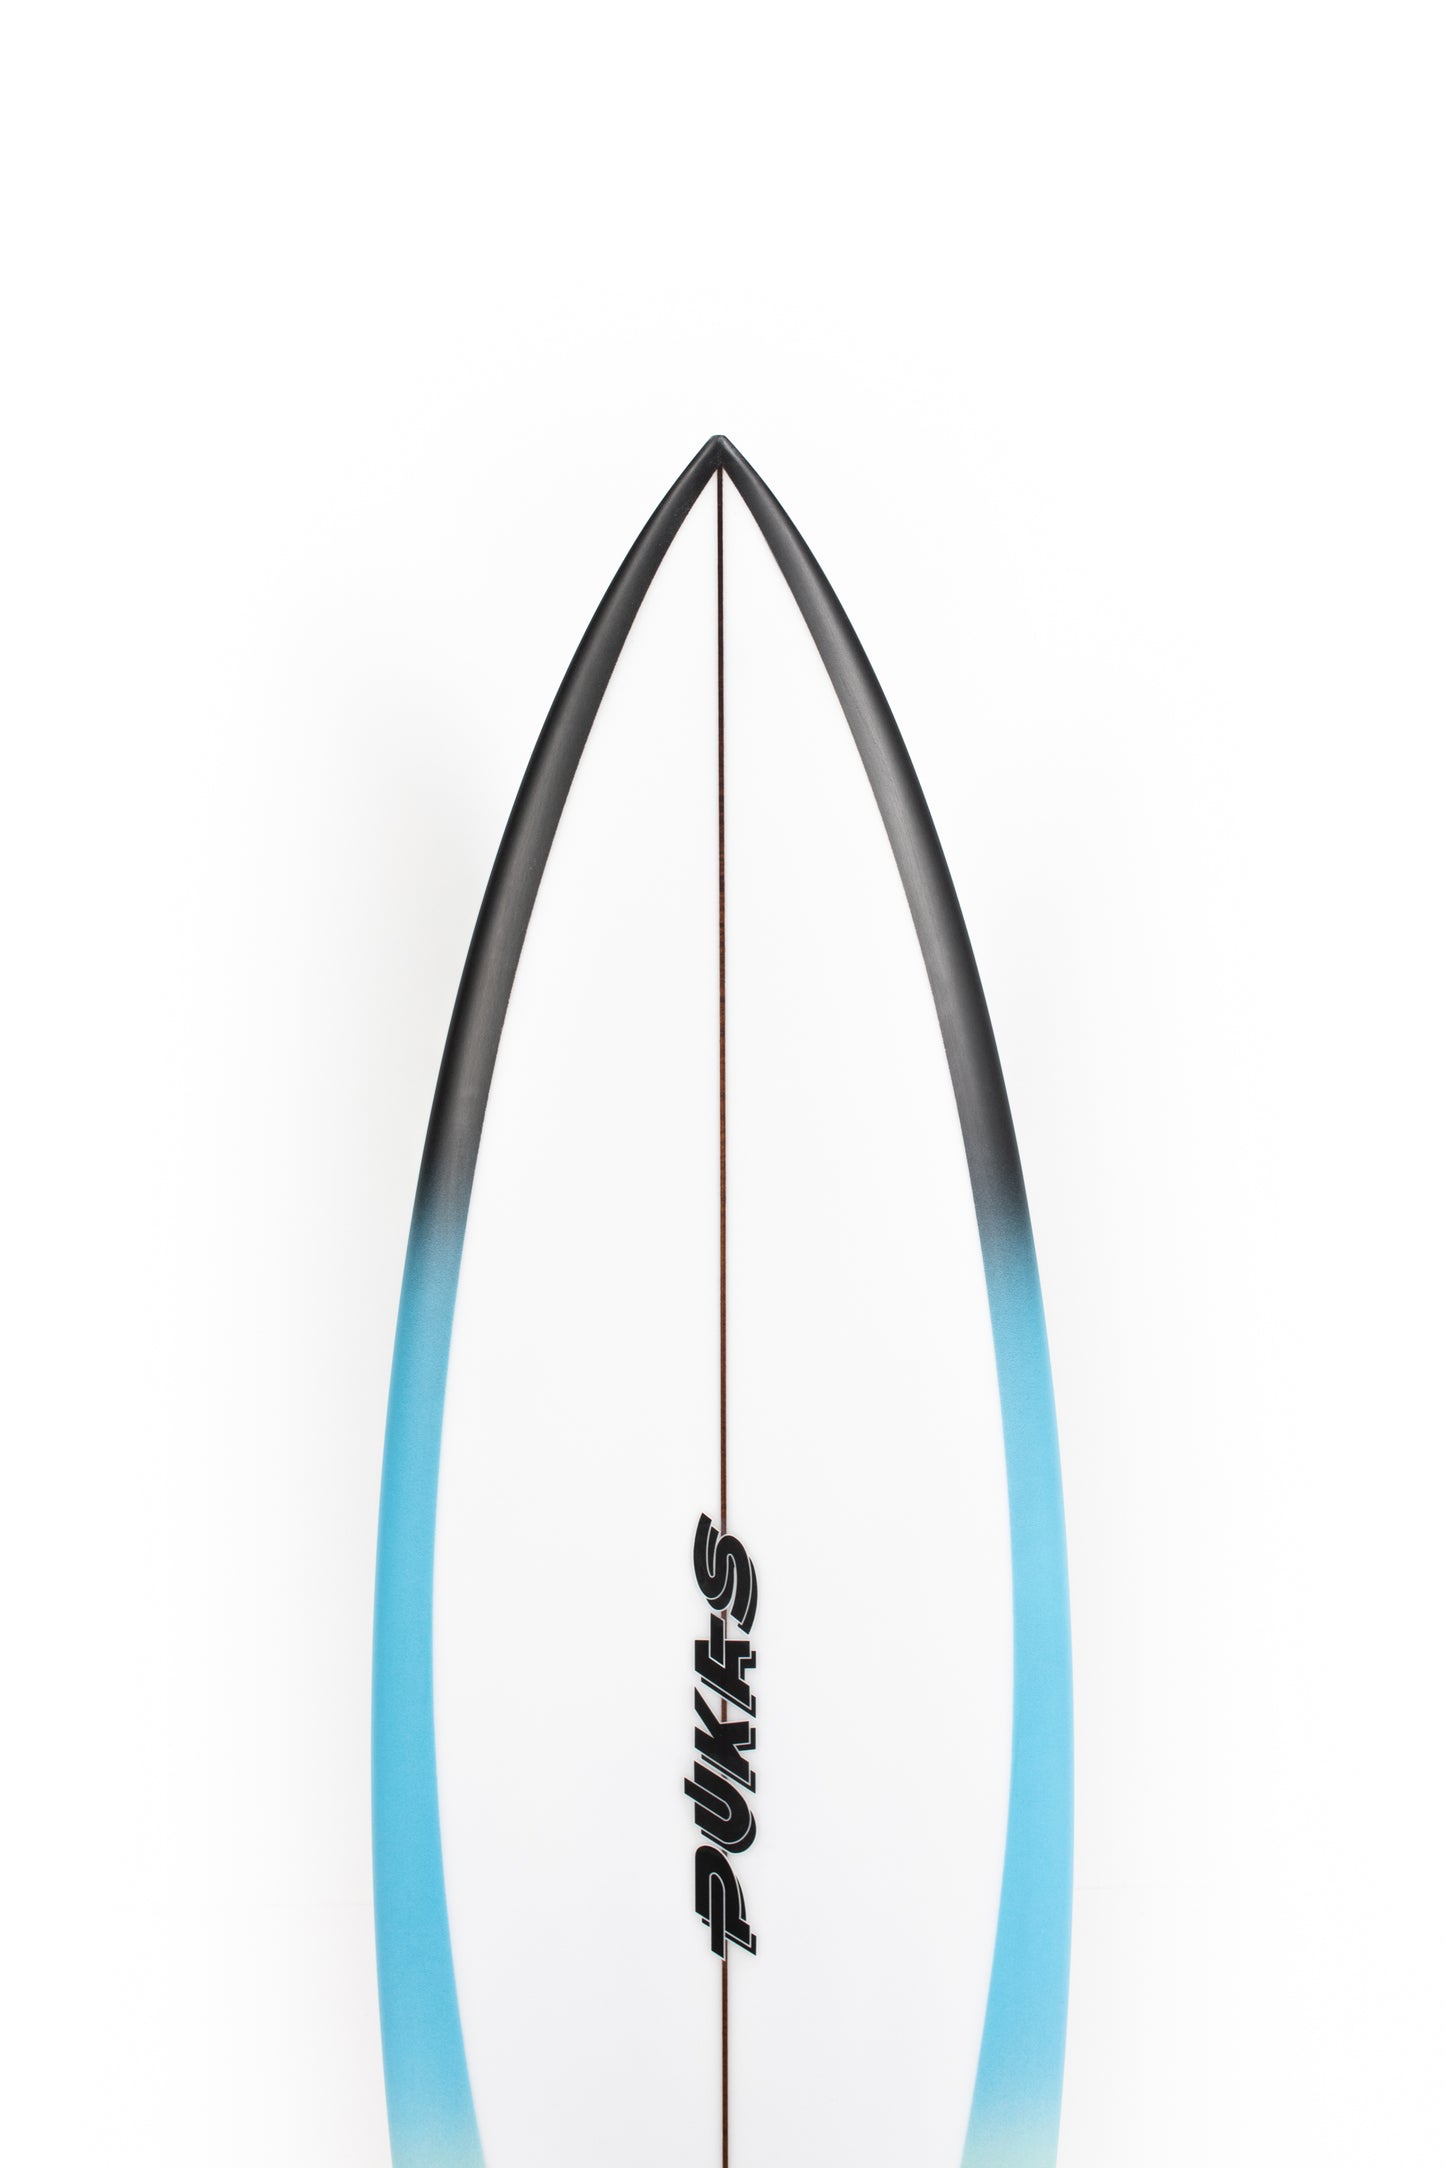 
                  
                    Pukas Surf Shop - Pukas Surfboard - TASTY TREAT ALL ROUND by Axel Lorentz - 5'7" x 19 x 2.33 x 25,85L - AX09153
                  
                